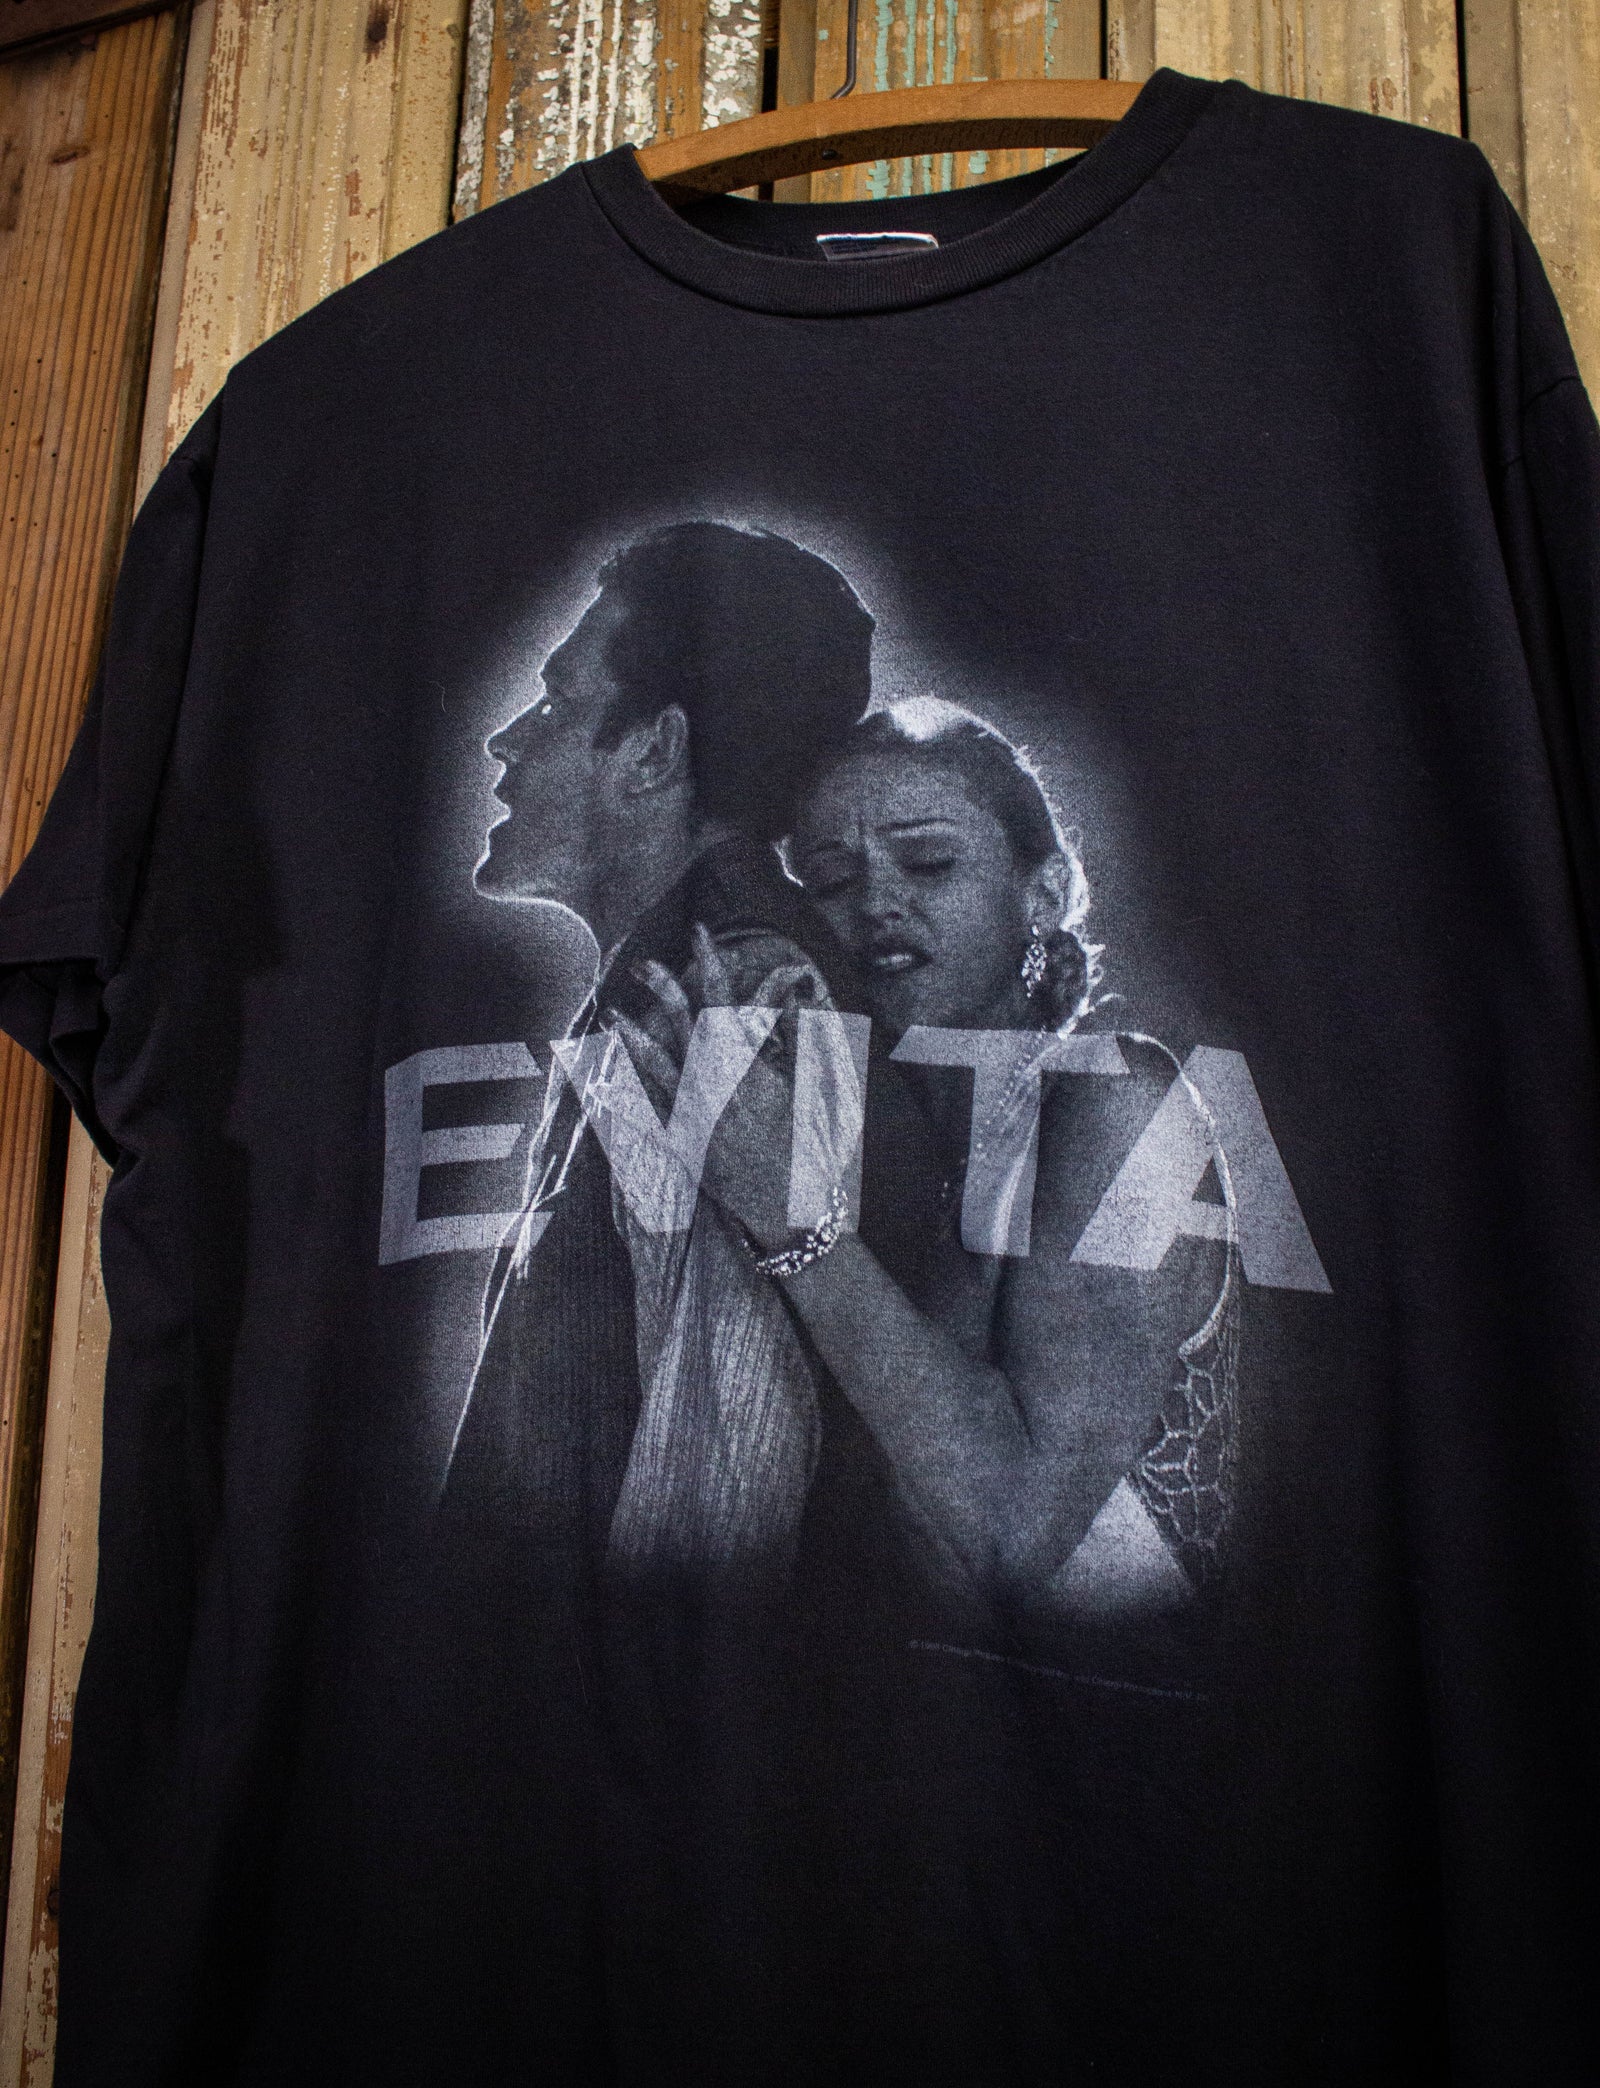 Vintage Evita Promo Graphic T Shirt Black XL